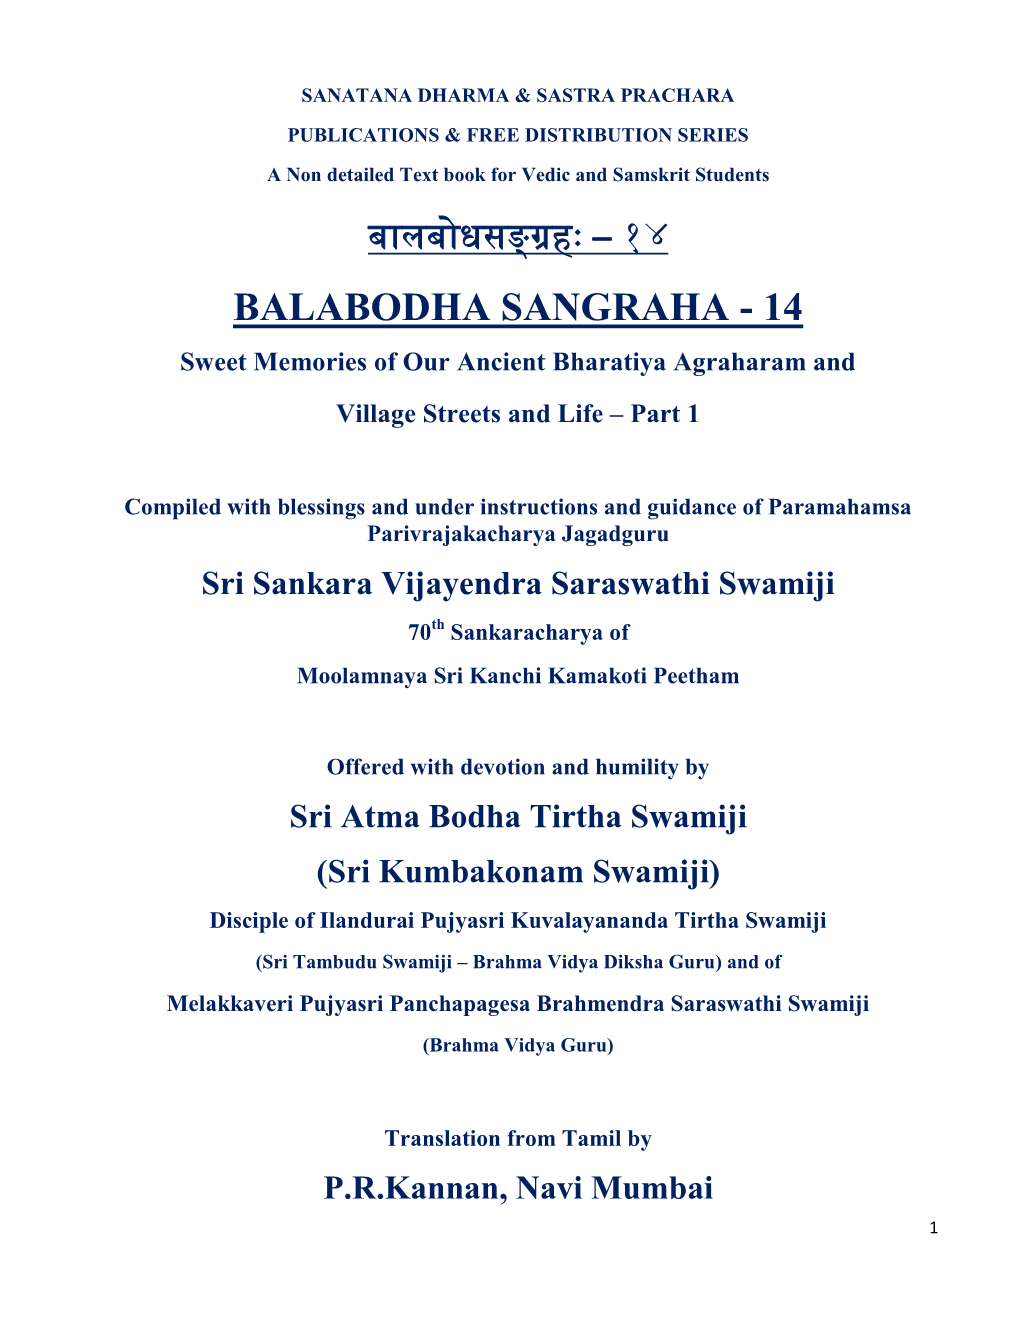 BALABODHA SANGRAHA - 14 Sweet Memories of Our Ancient Bharatiya Agraharam and Village Streets and Life – Part 1